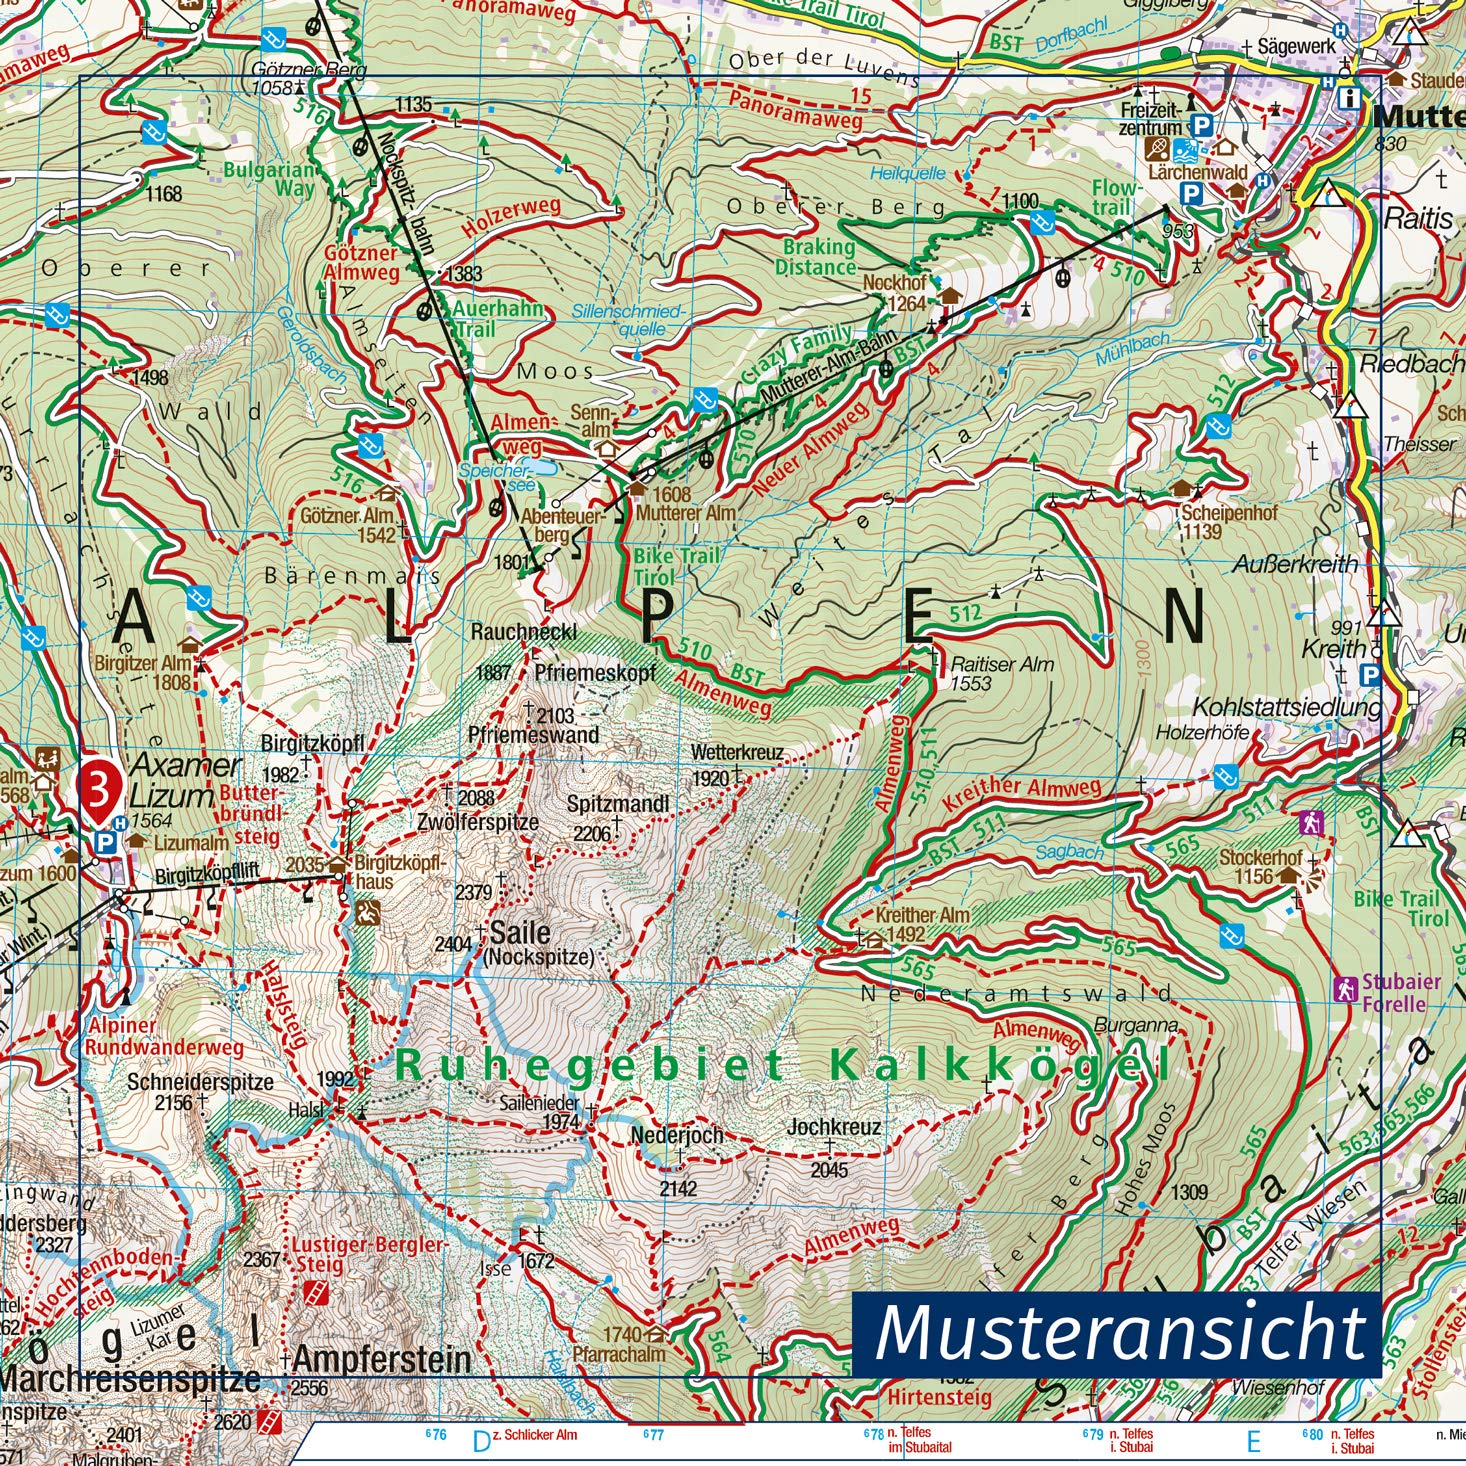 33 Arlberg, Verwallgruppe 1:50.000 - Kompass Wanderkarte